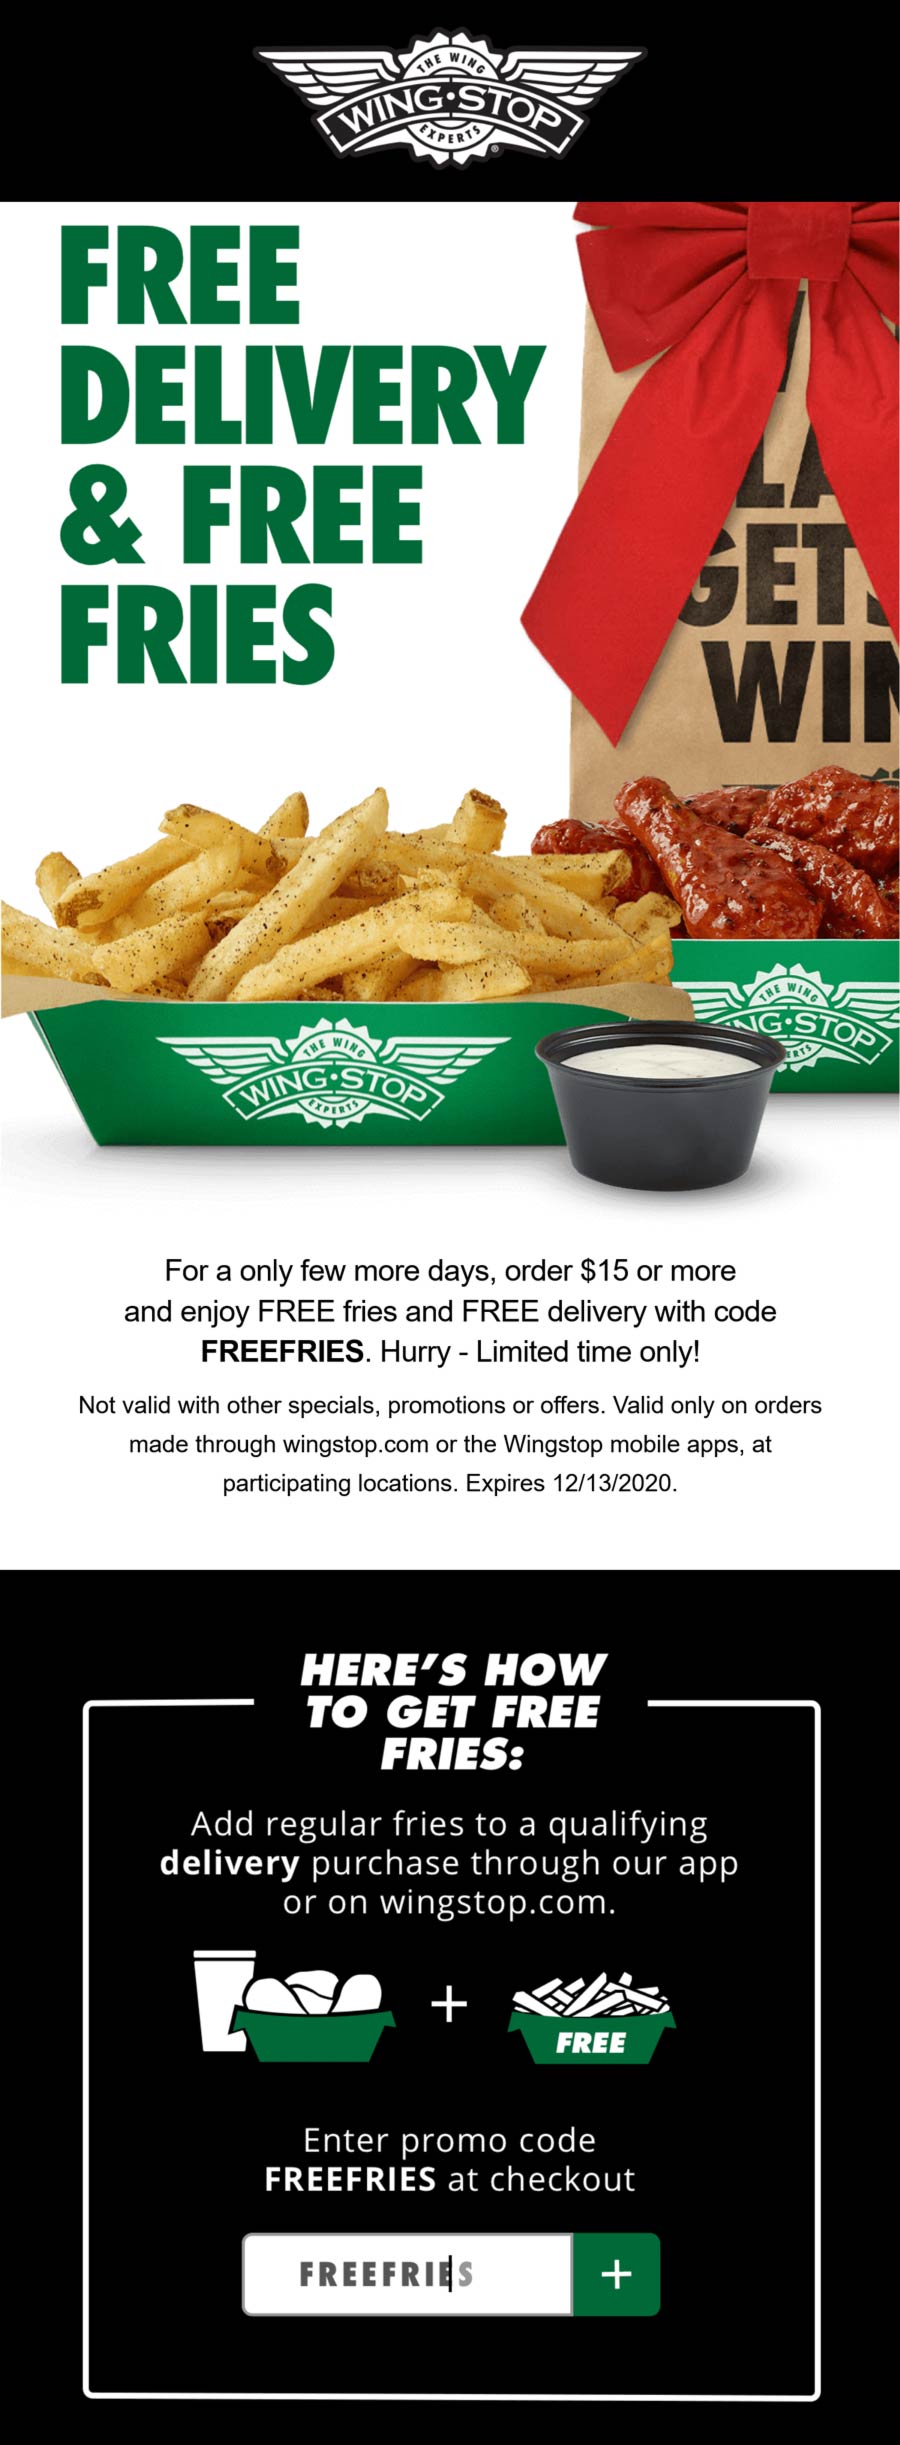 Wingstop restaurants Coupon  Free fries & delivery at Wingstop via promo code FREEFRIES #wingstop 